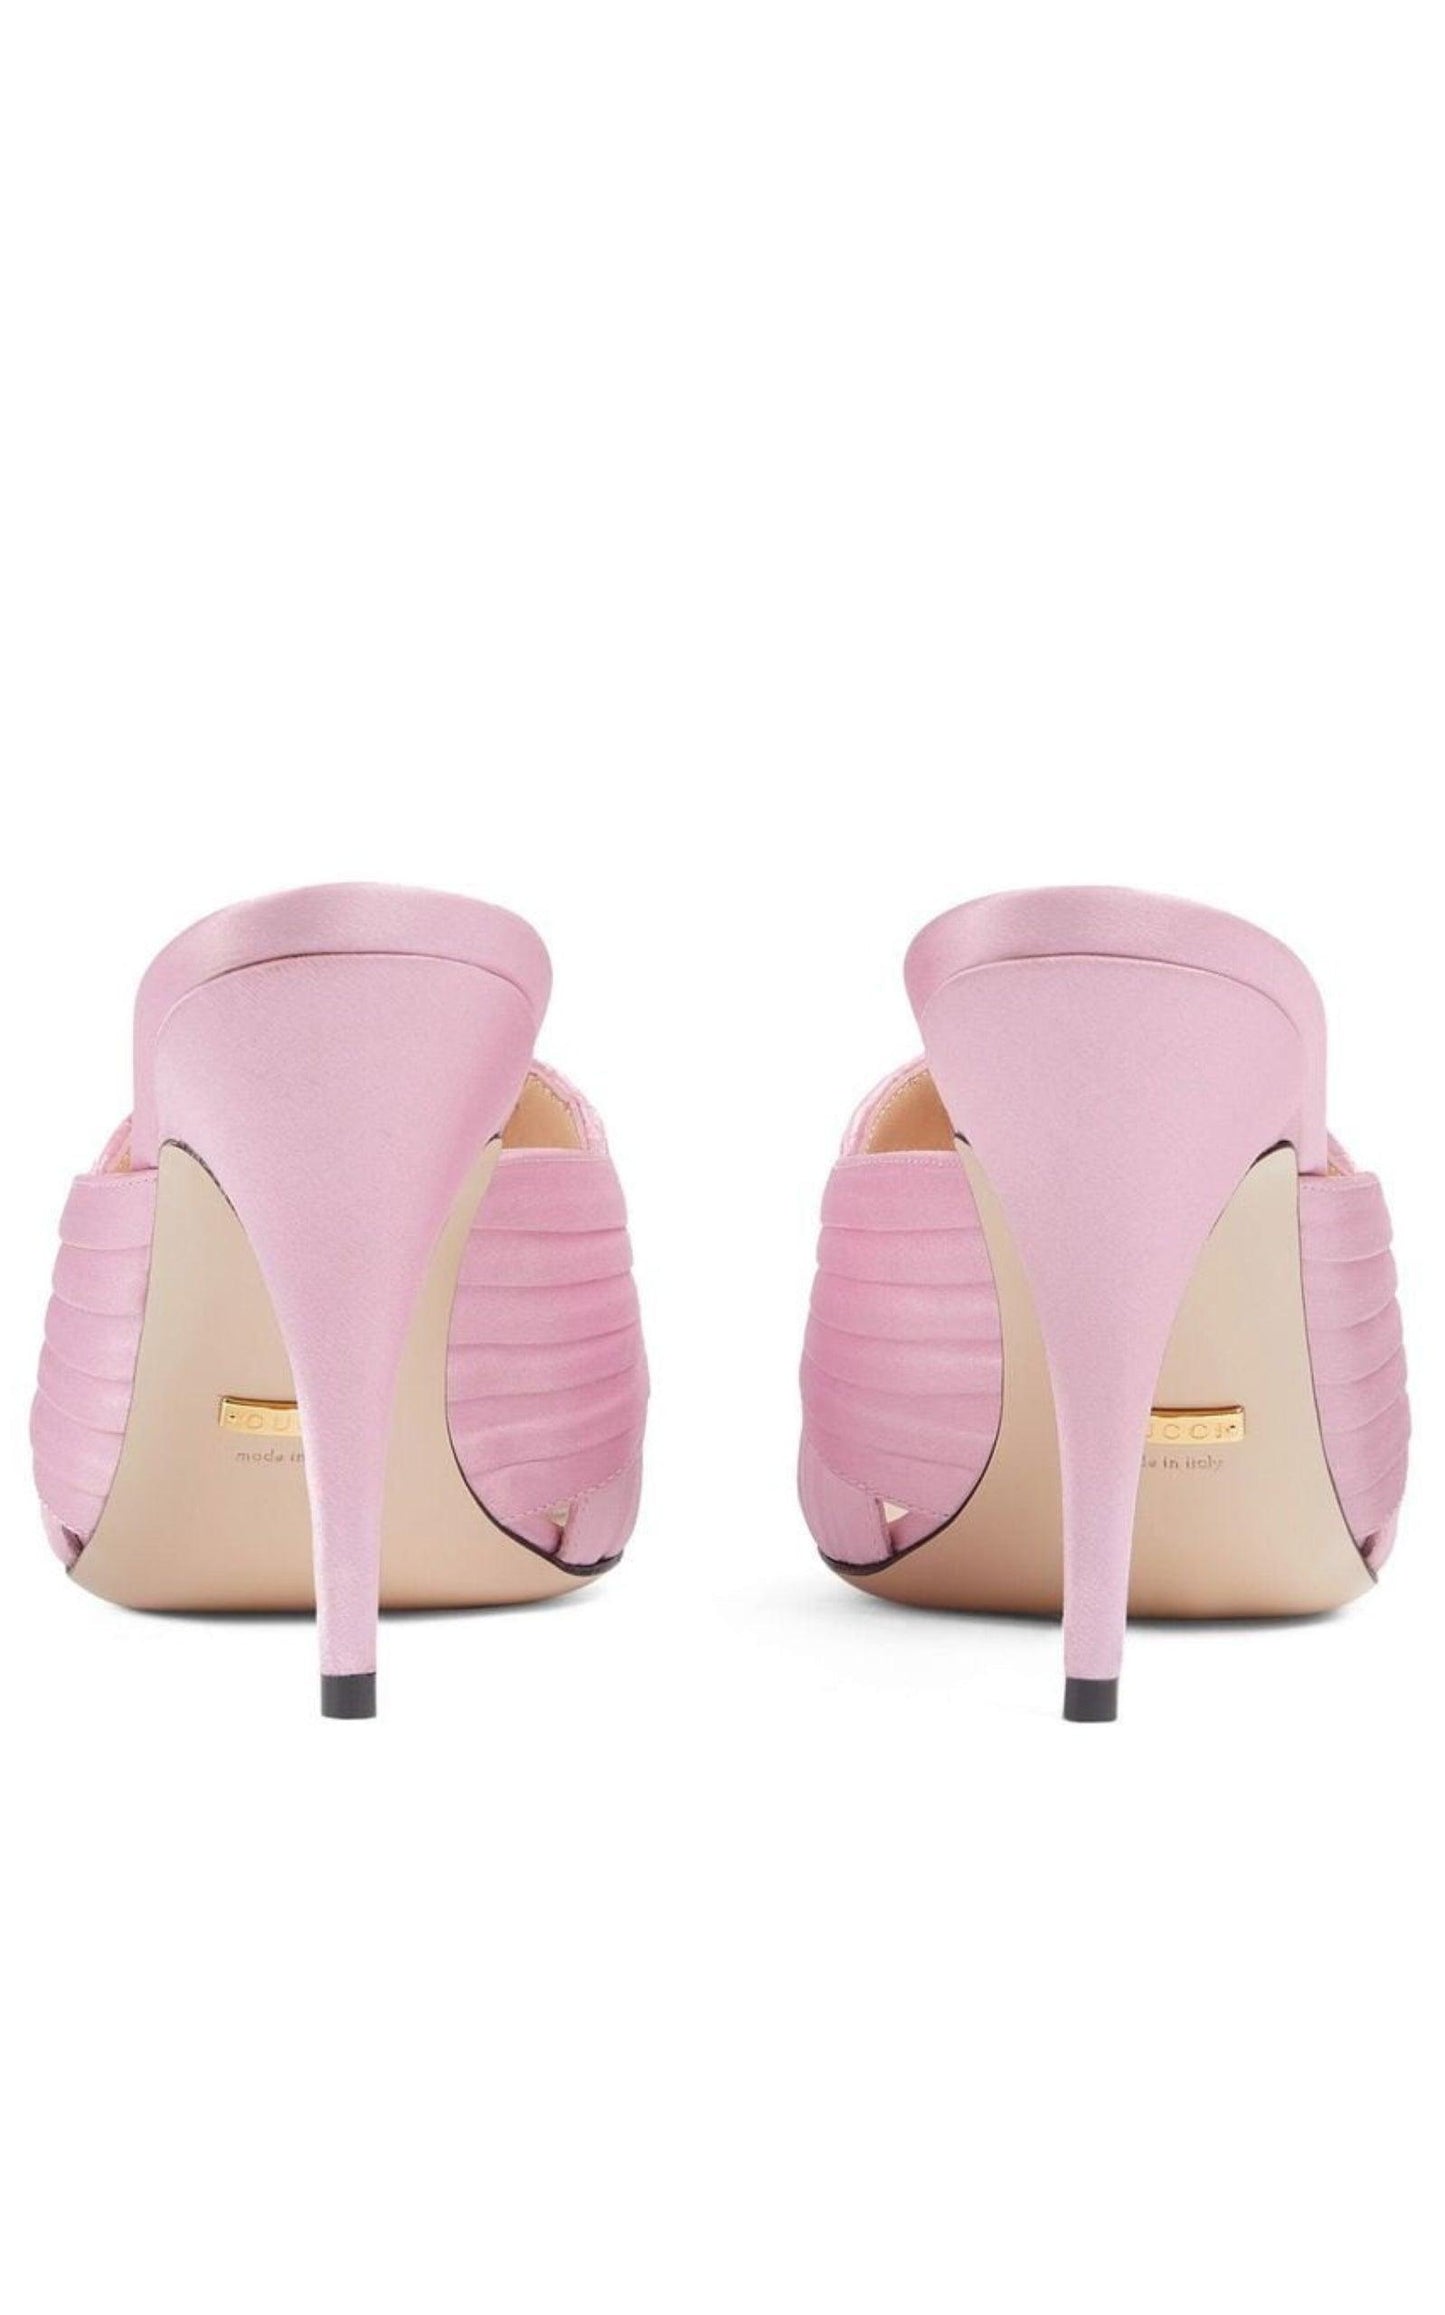 Sandalen aus rosafarbenem Satin mit Doppel-G, 95 mm